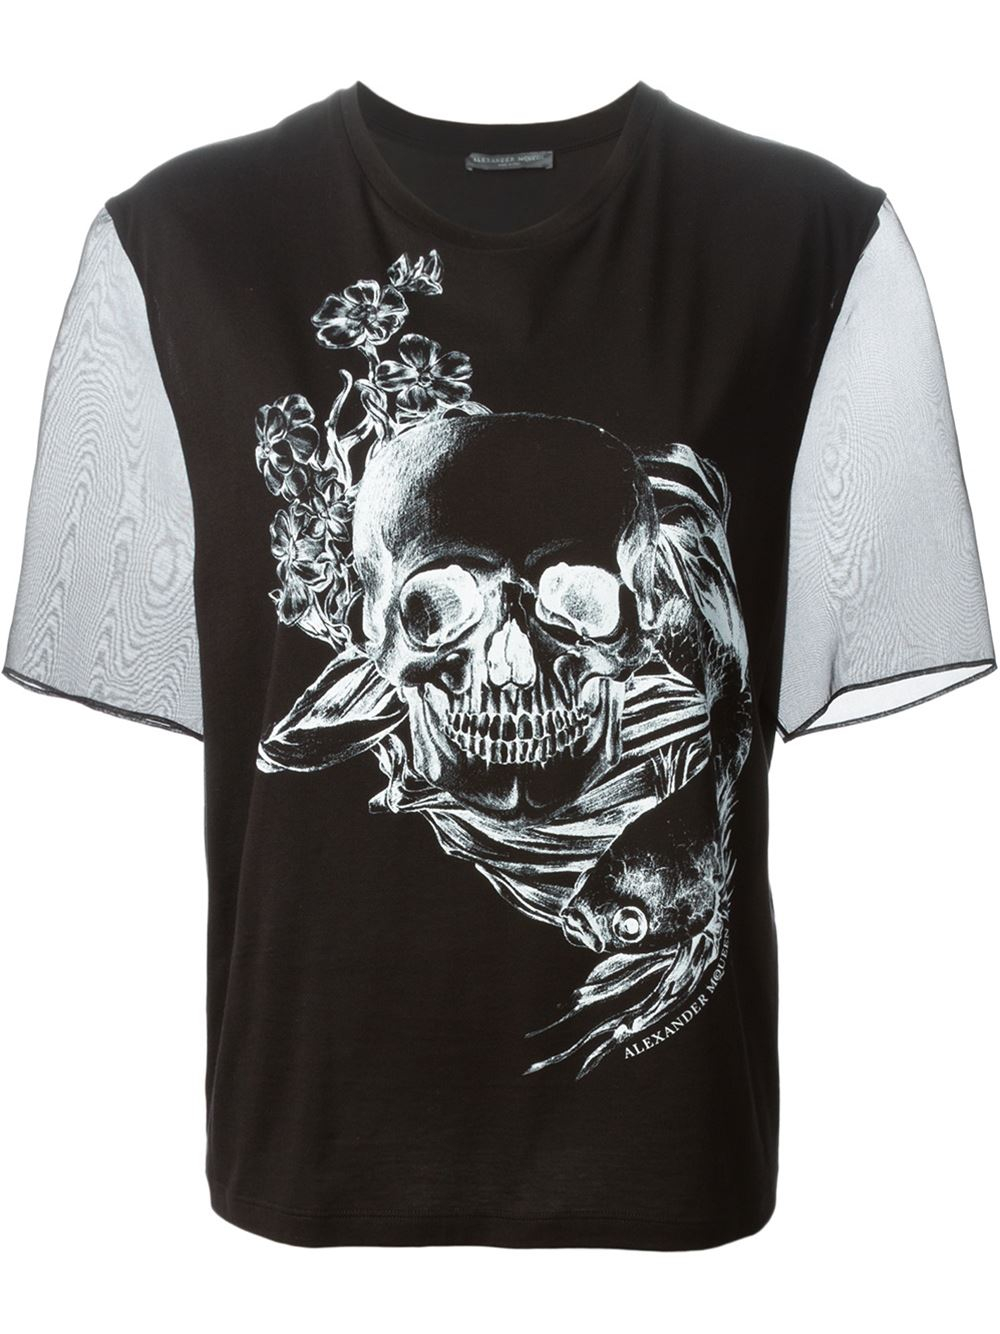 Lyst - Alexander Mcqueen Aquatic Skull Print T-Shirt in Black